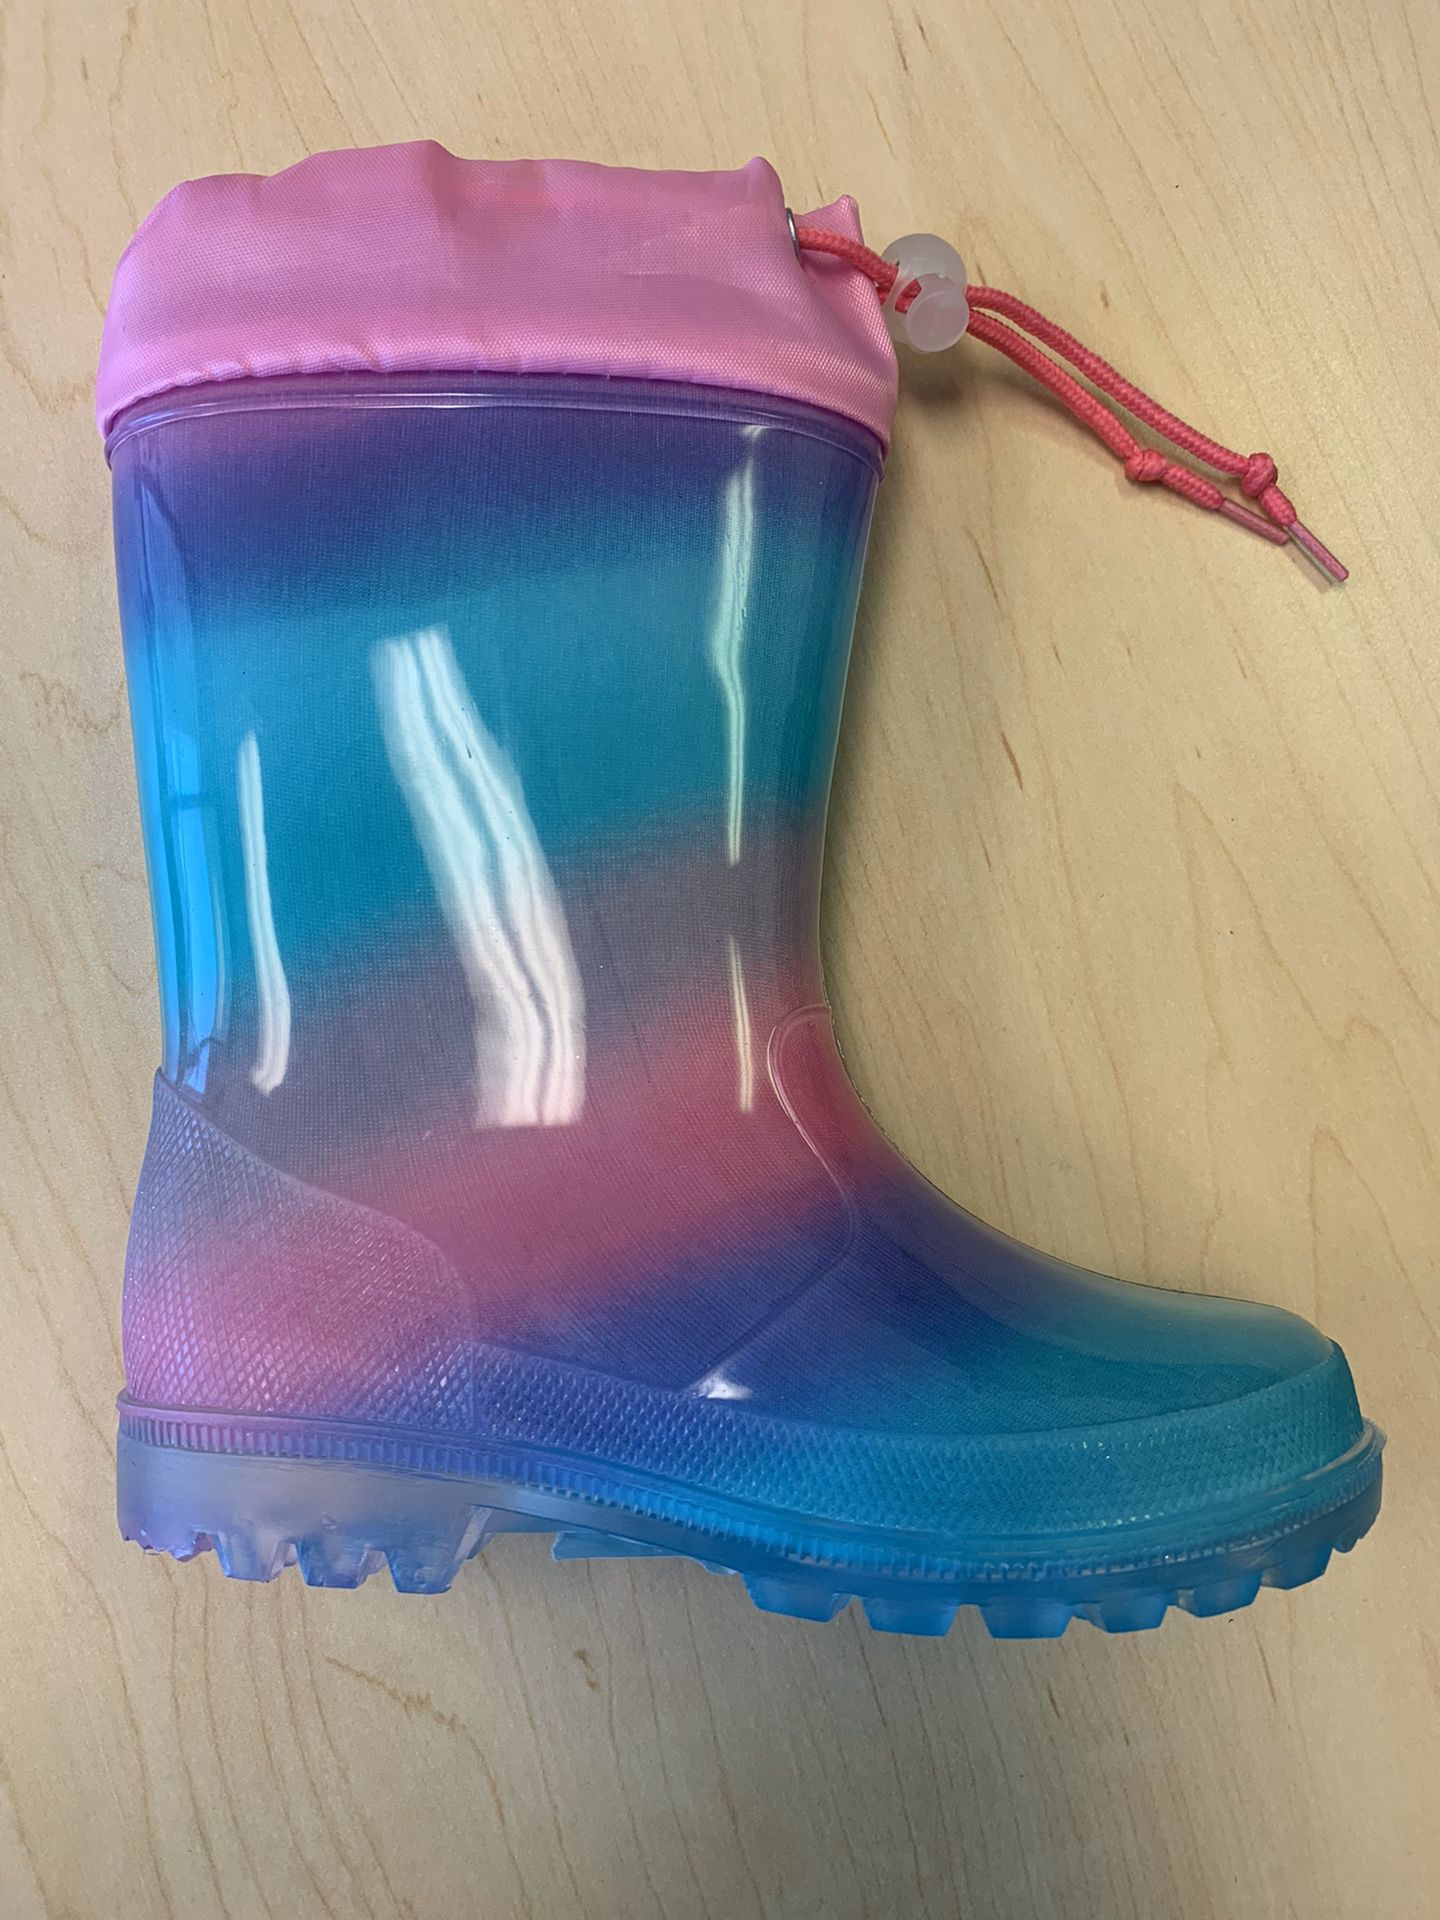 Rain boots for girls kids sizes 11,12,13,1,2,3,4